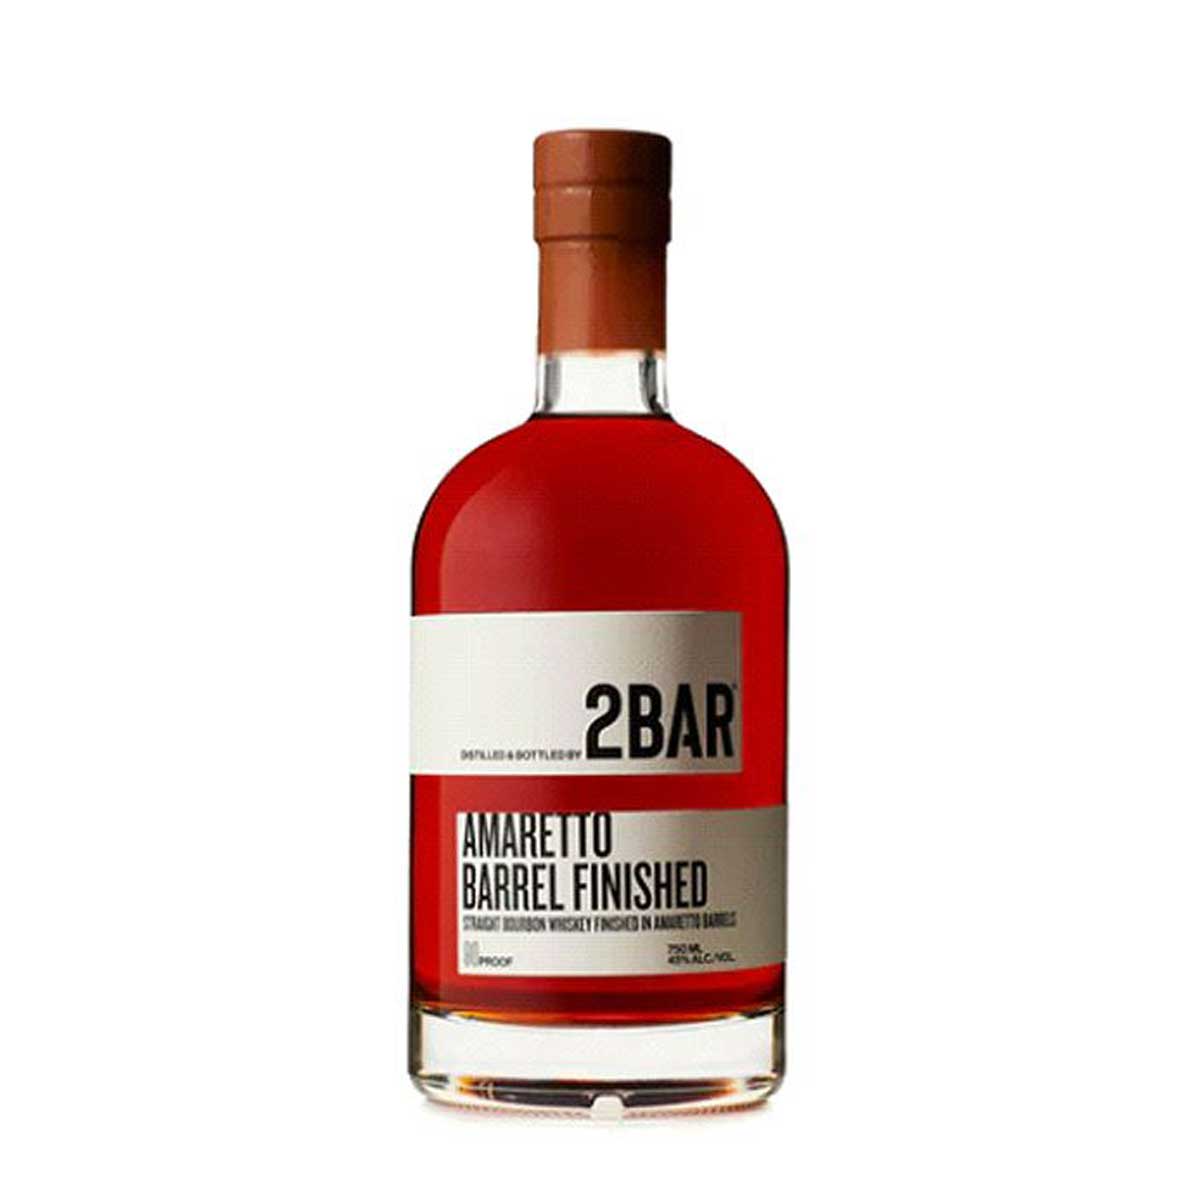 TAG Liquor Stores Delivery BC - 2Bar Amaretto Barrel Finished Bourbon 750ml